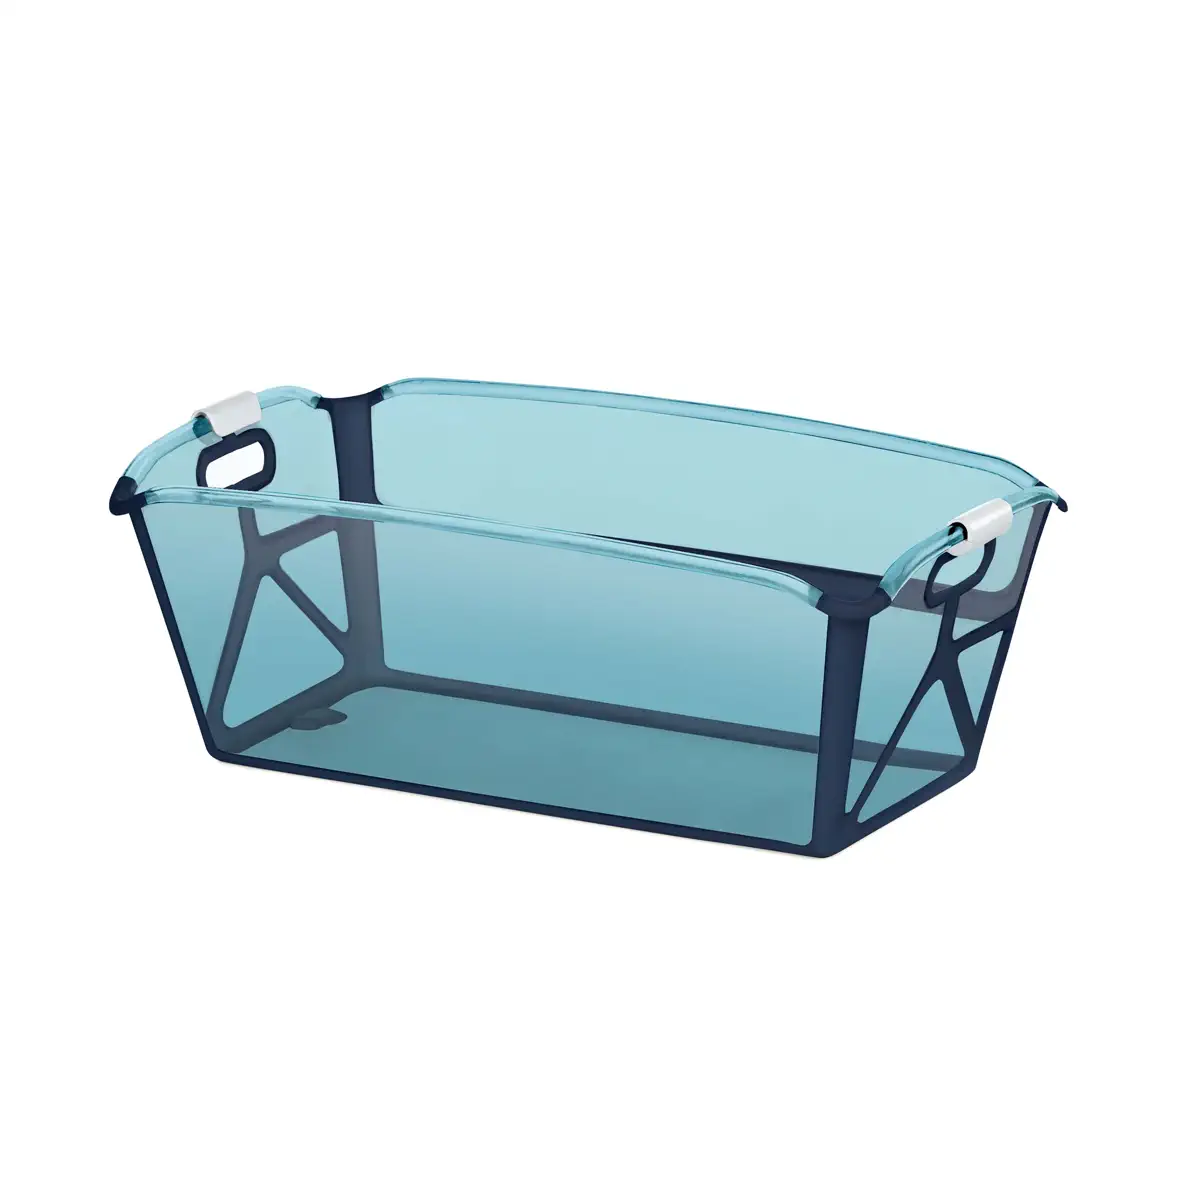 Stokke bañera plegable FLEXIBATH - azul transparente